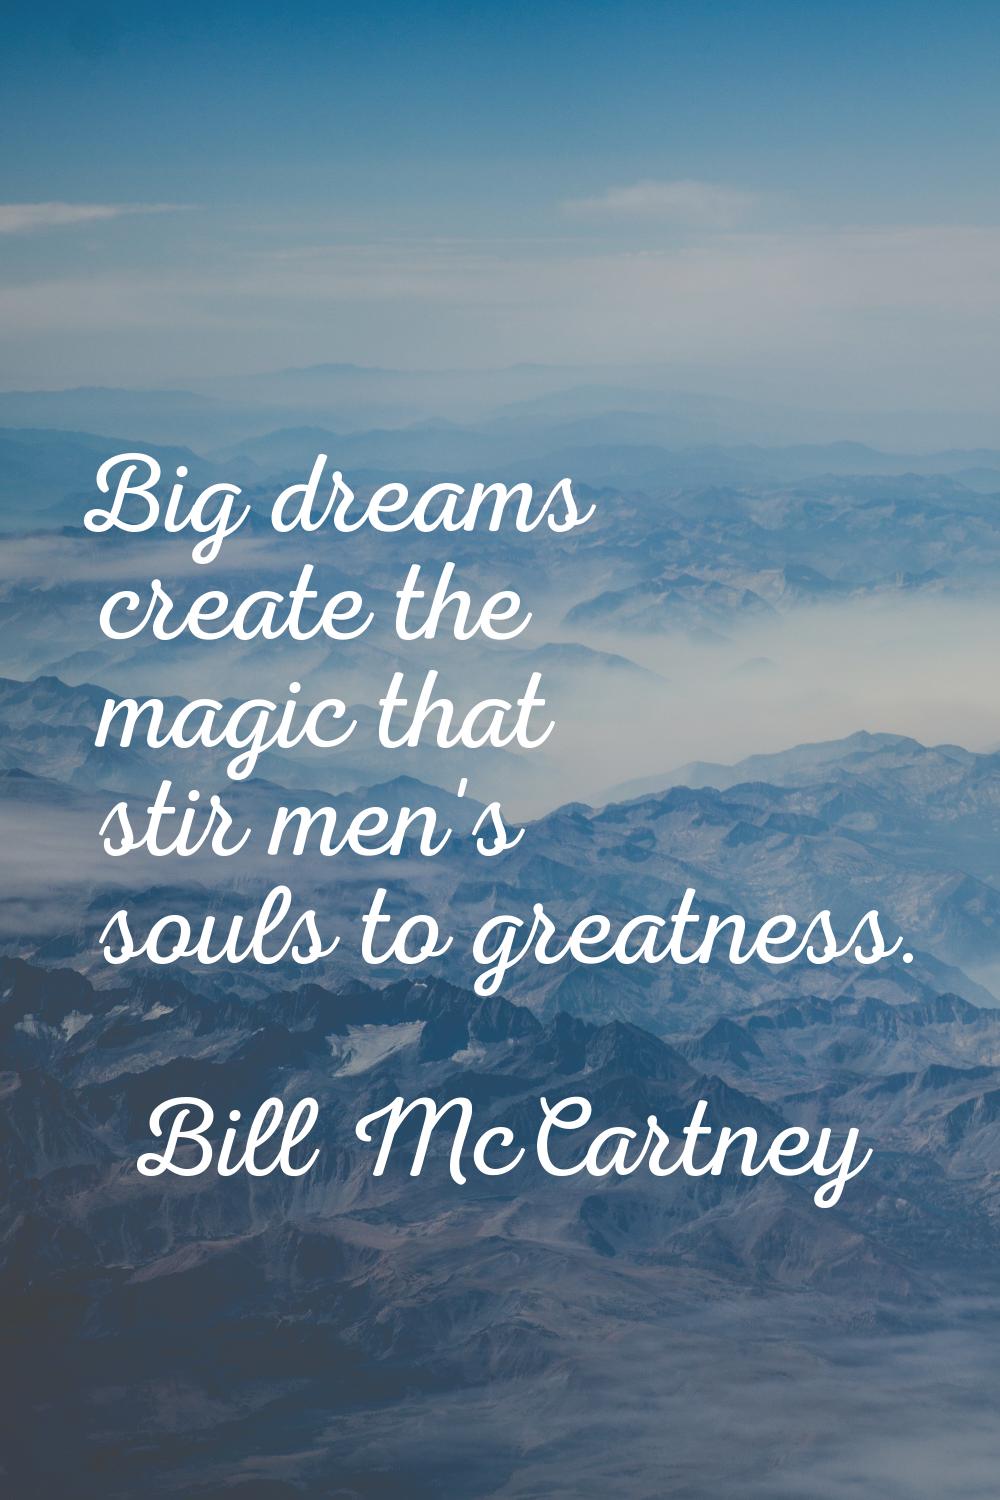 Big dreams create the magic that stir men's souls to greatness.